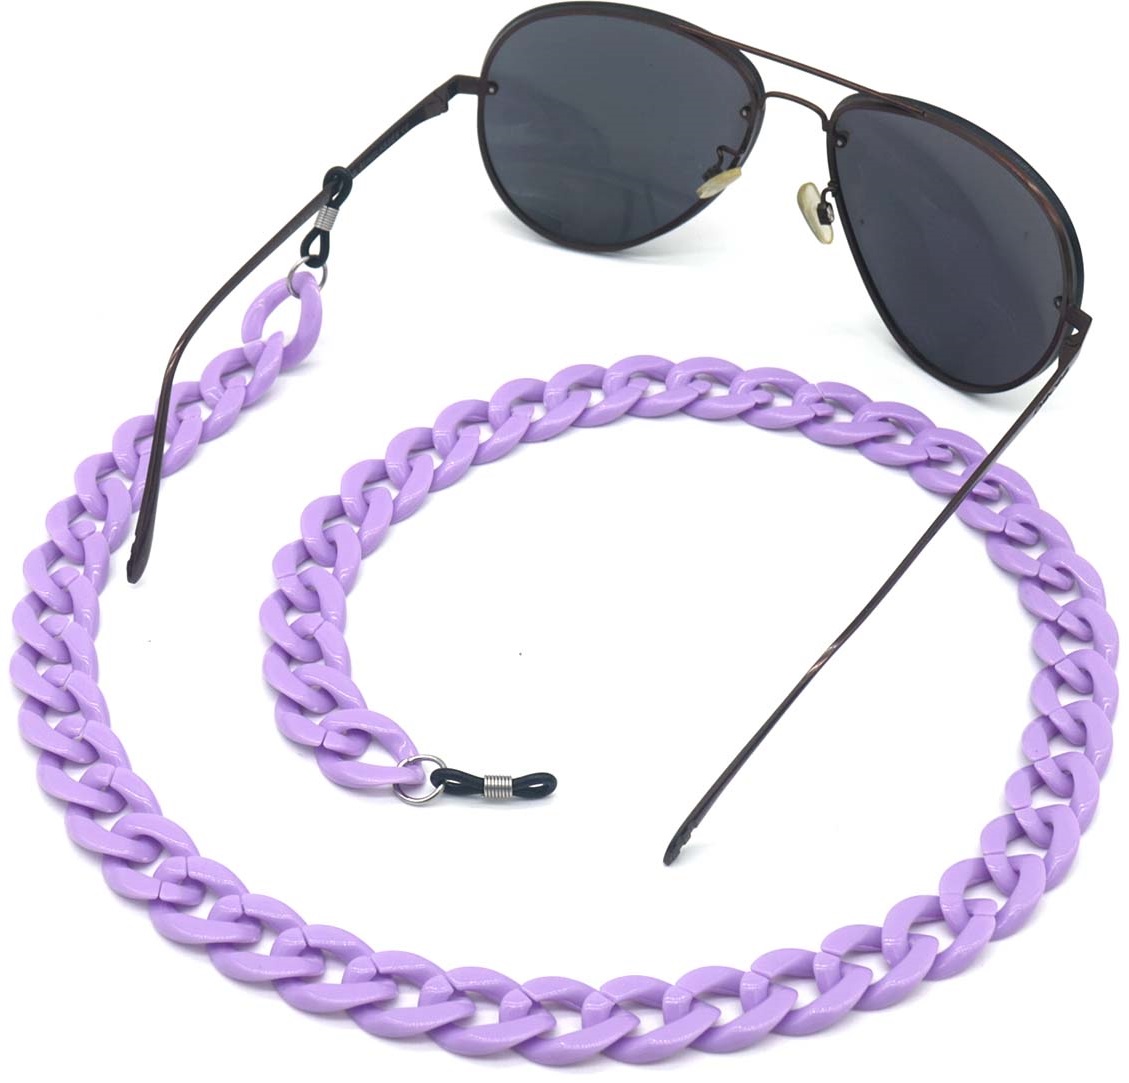 H-D15.2 GL004-101-16 Sunglass Chain Purple